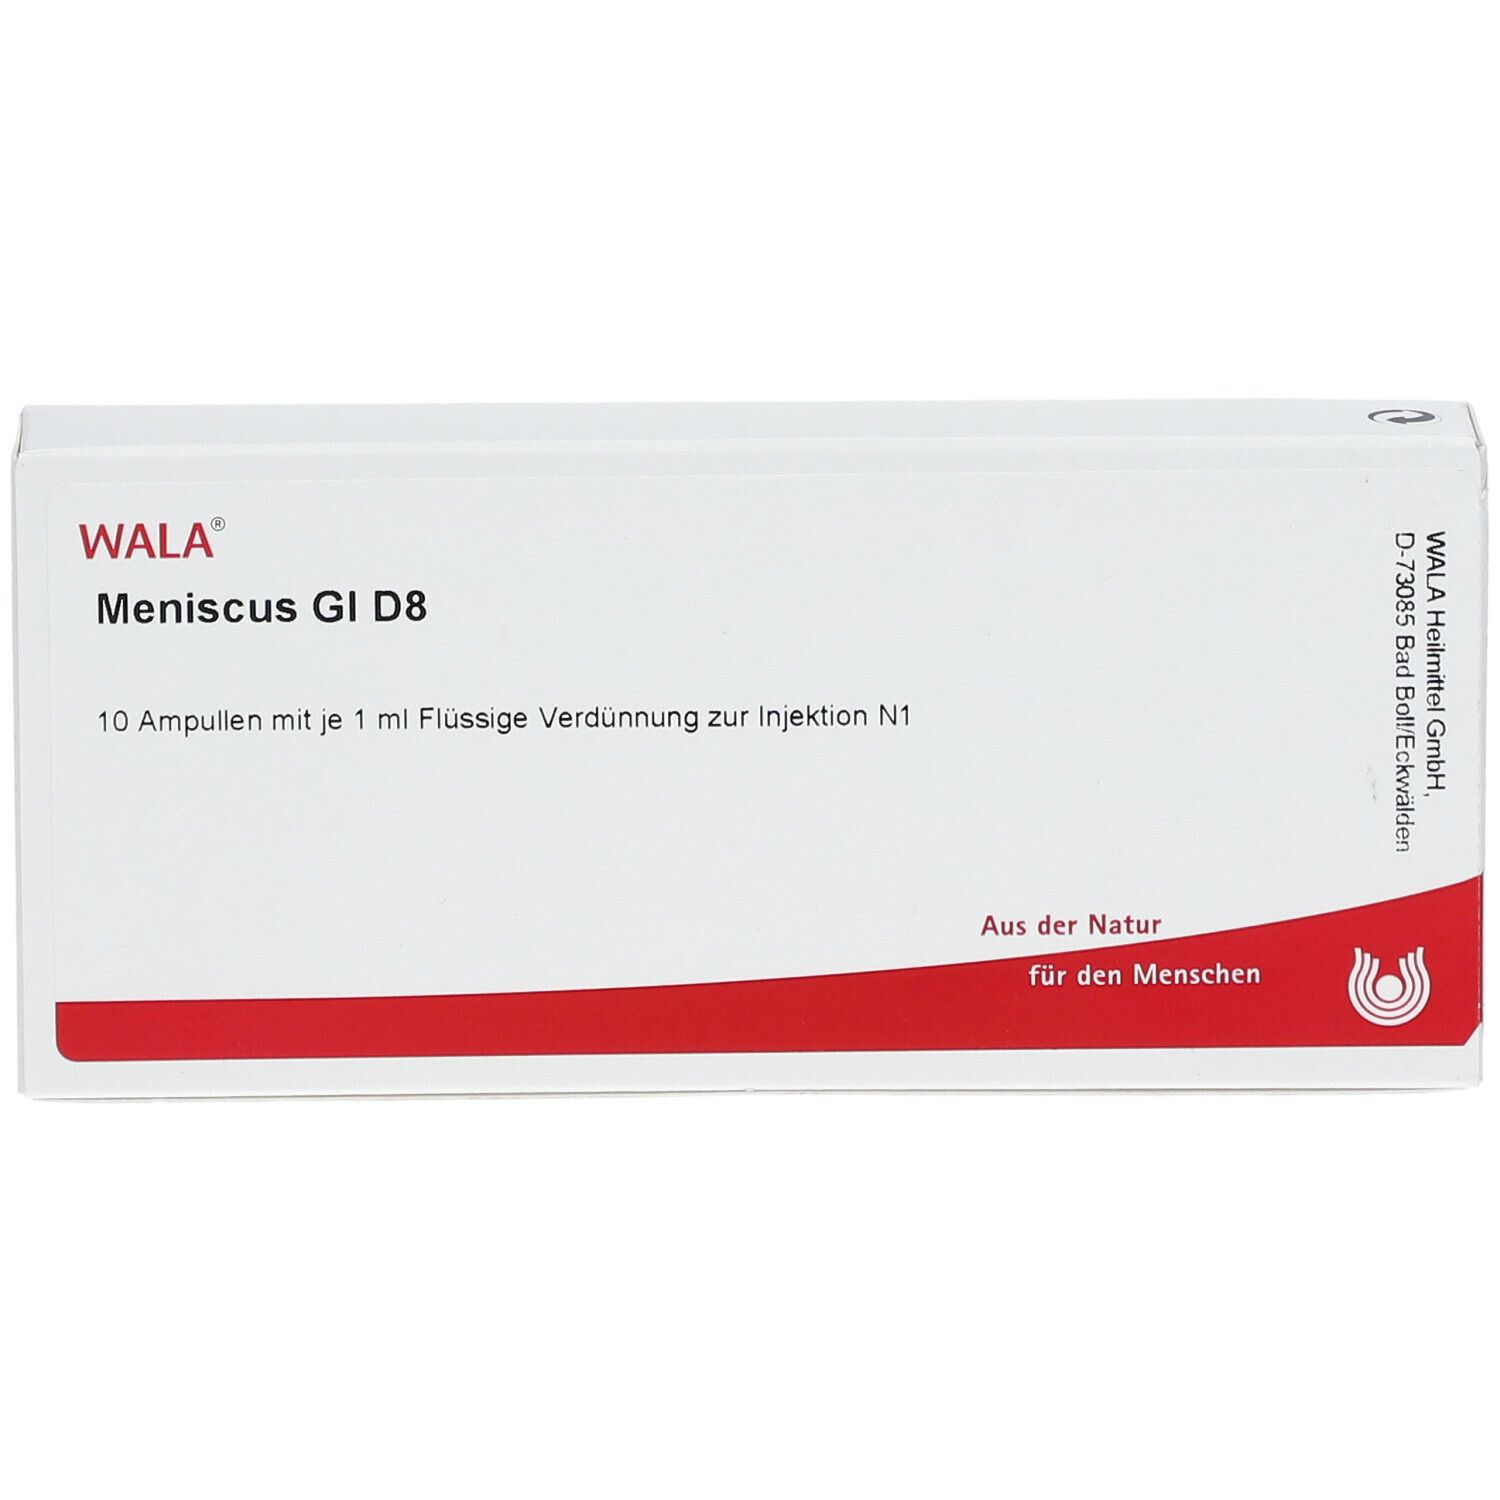 WALA® Meniscus Gl D 8